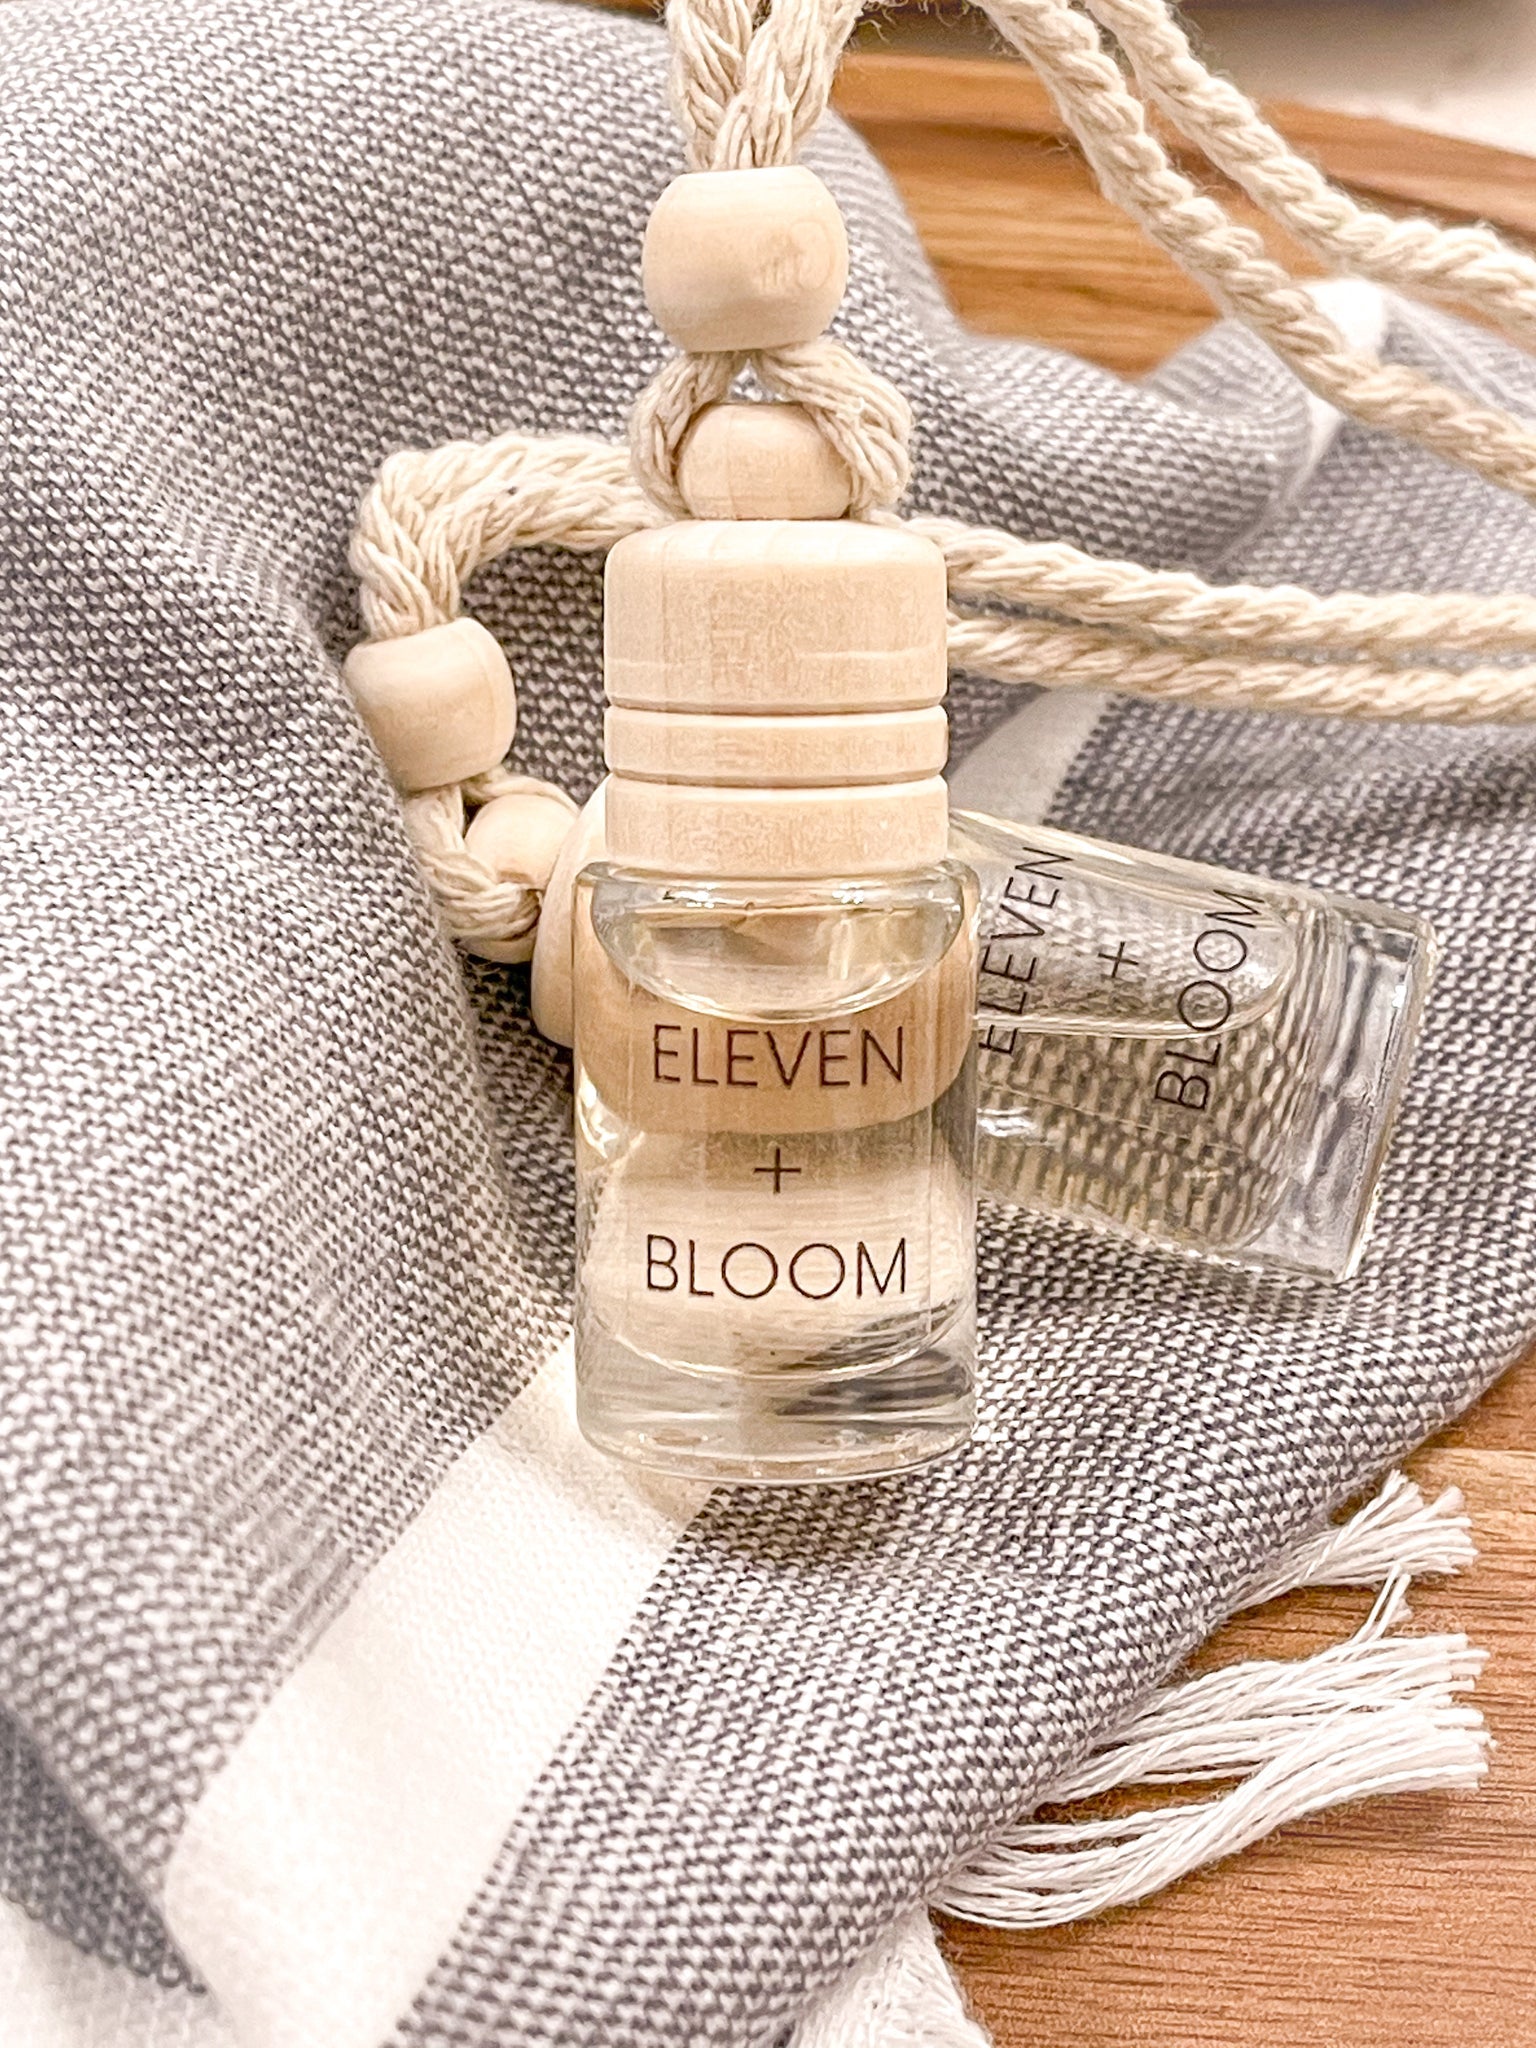 Eleven + Bloom - Car Diffuser - True Love